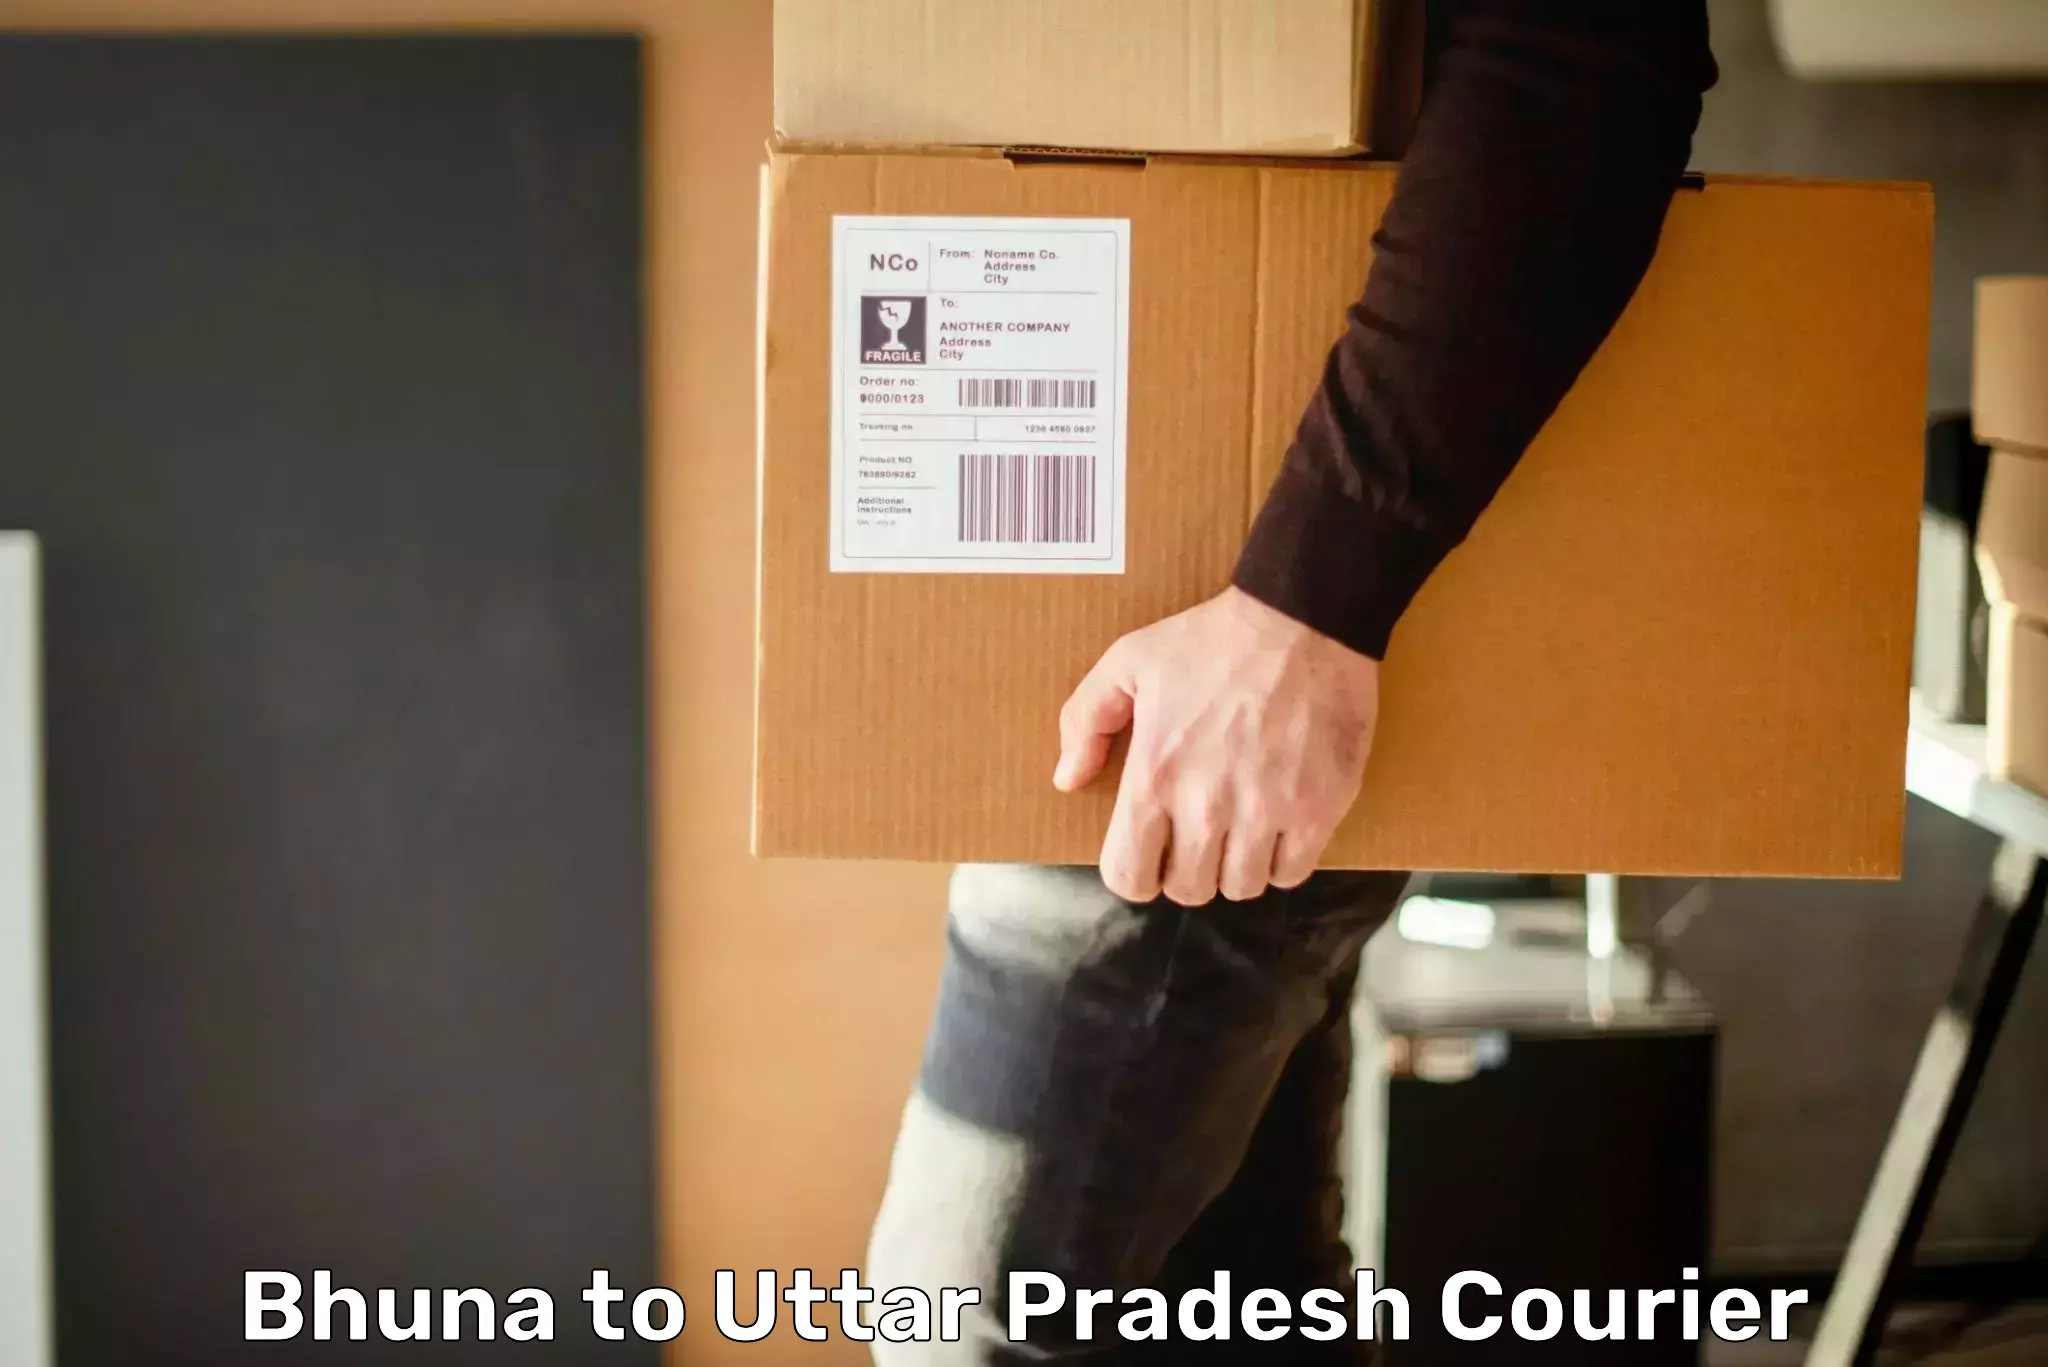 High-speed parcel service Bhuna to Uttar Pradesh